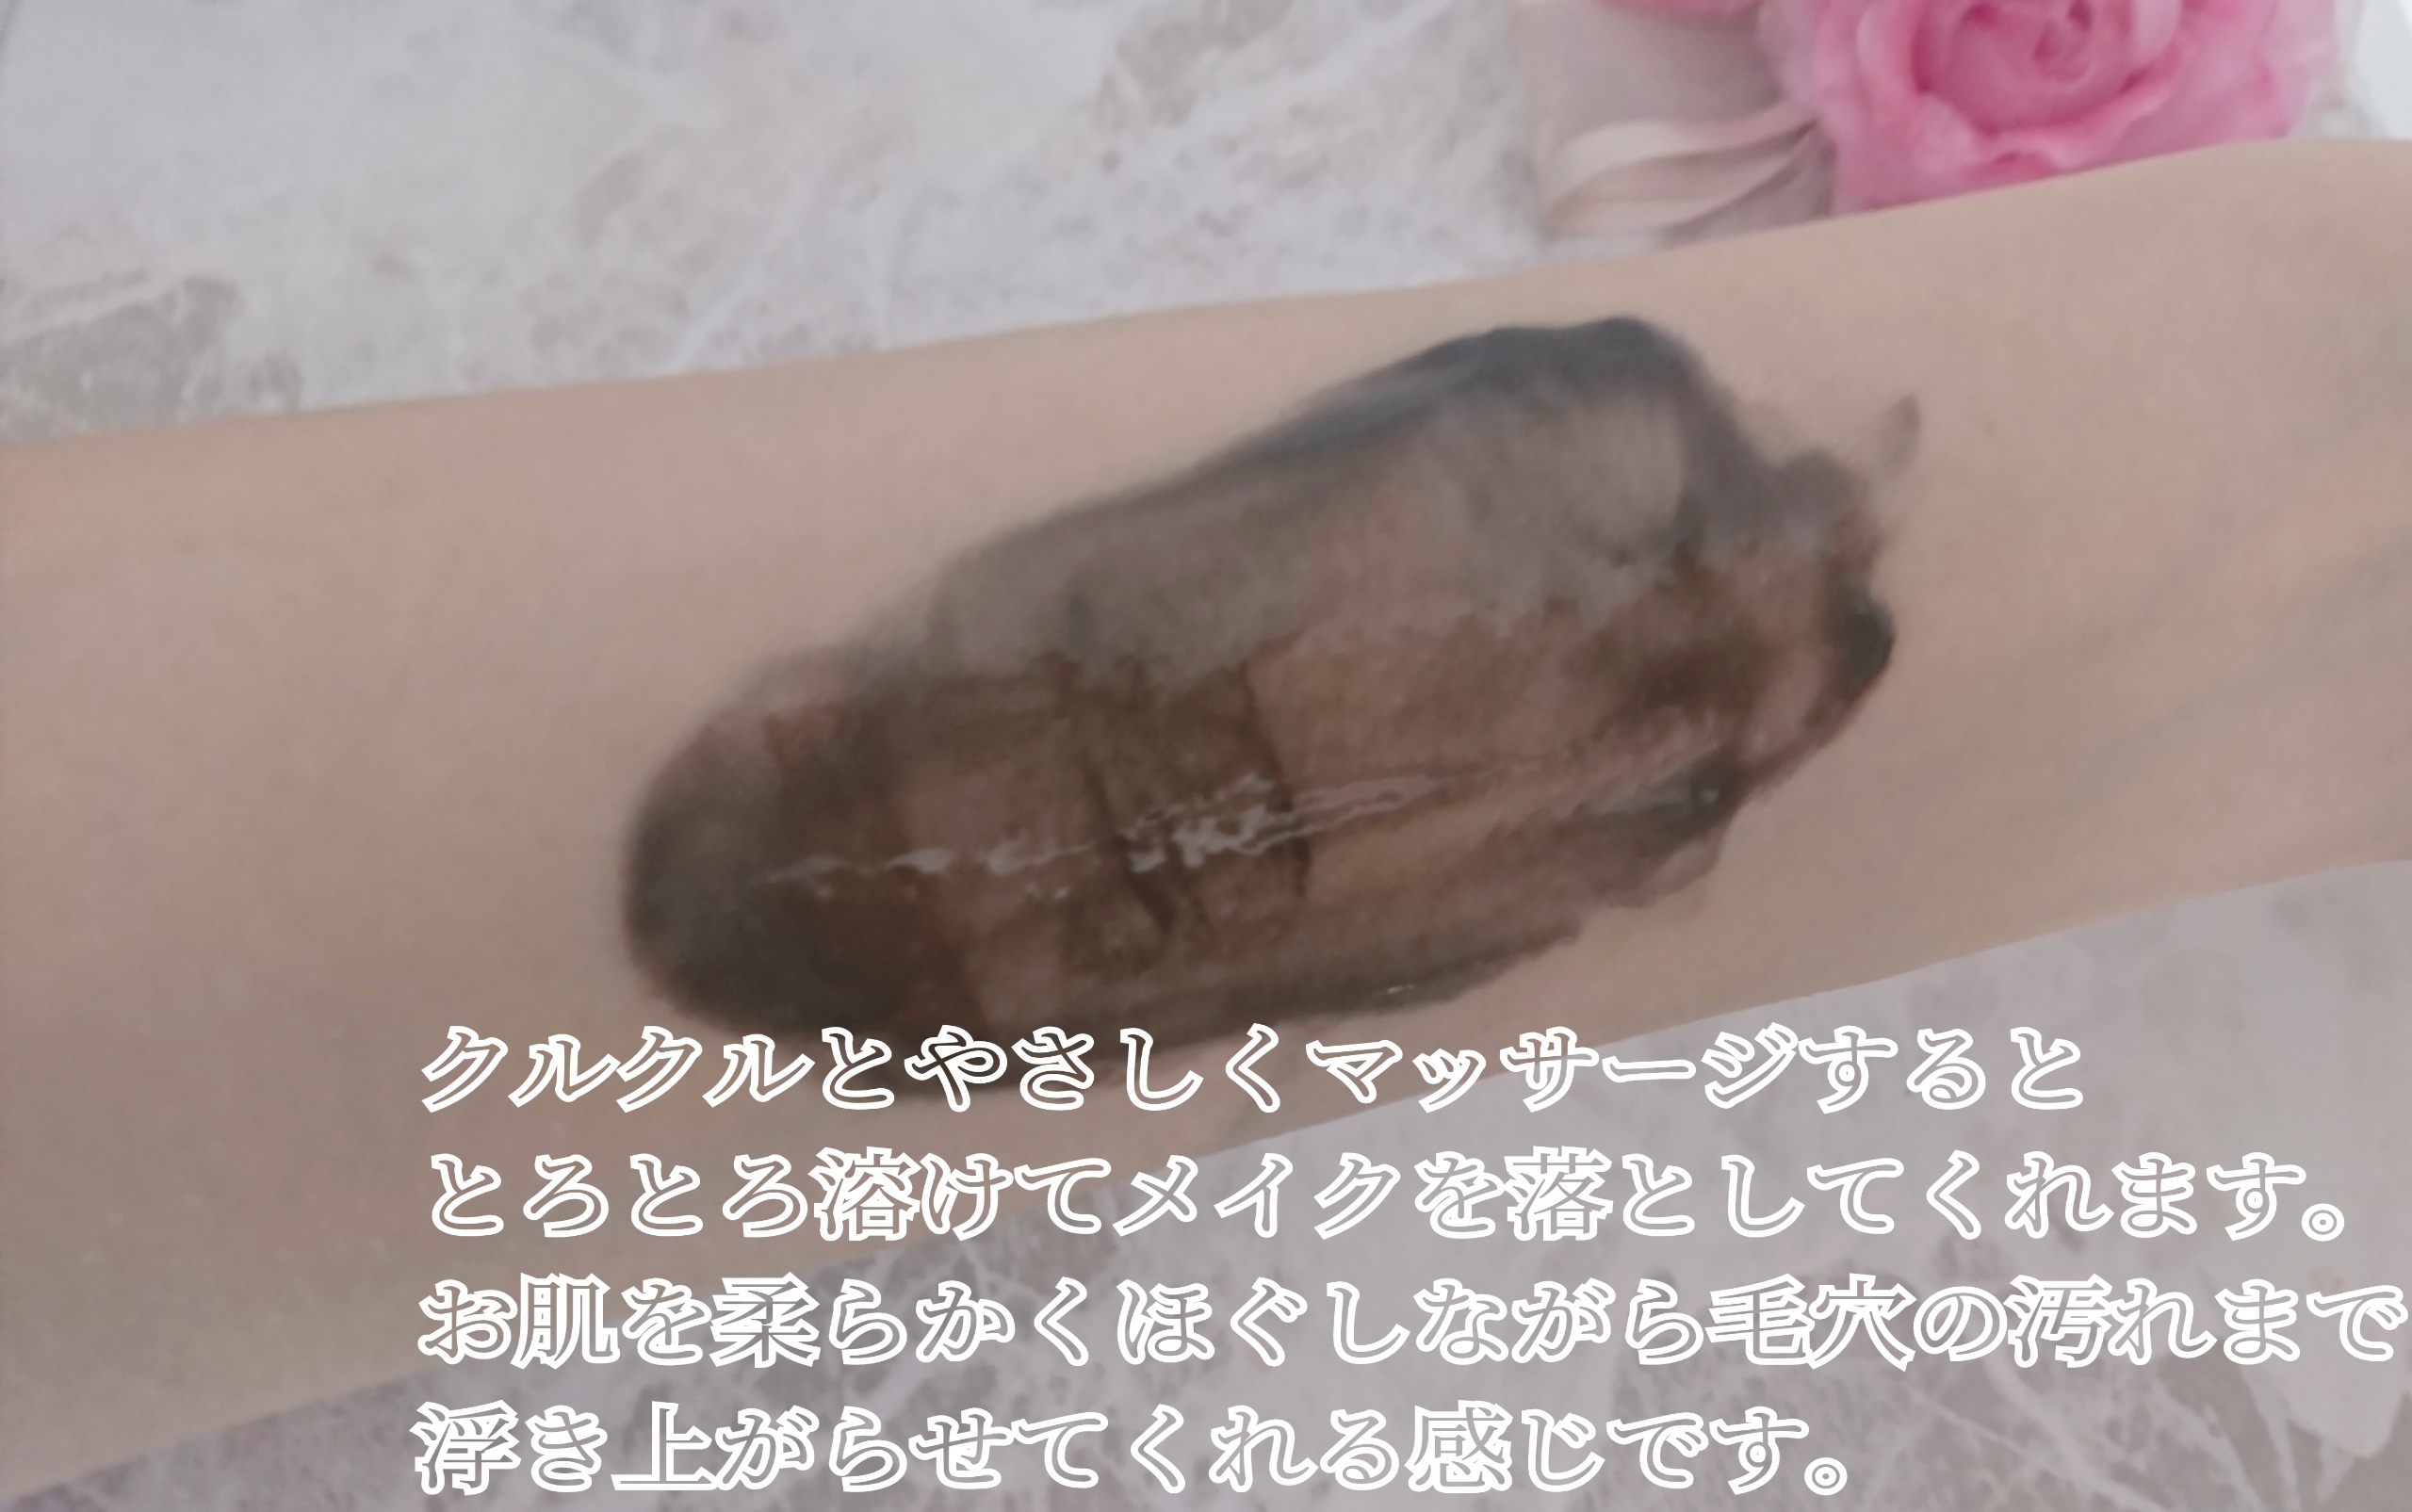 DUO(デュオ) ザ クレンジングバーム ブラックリペアを使ったYuKaRi♡さんのクチコミ画像5